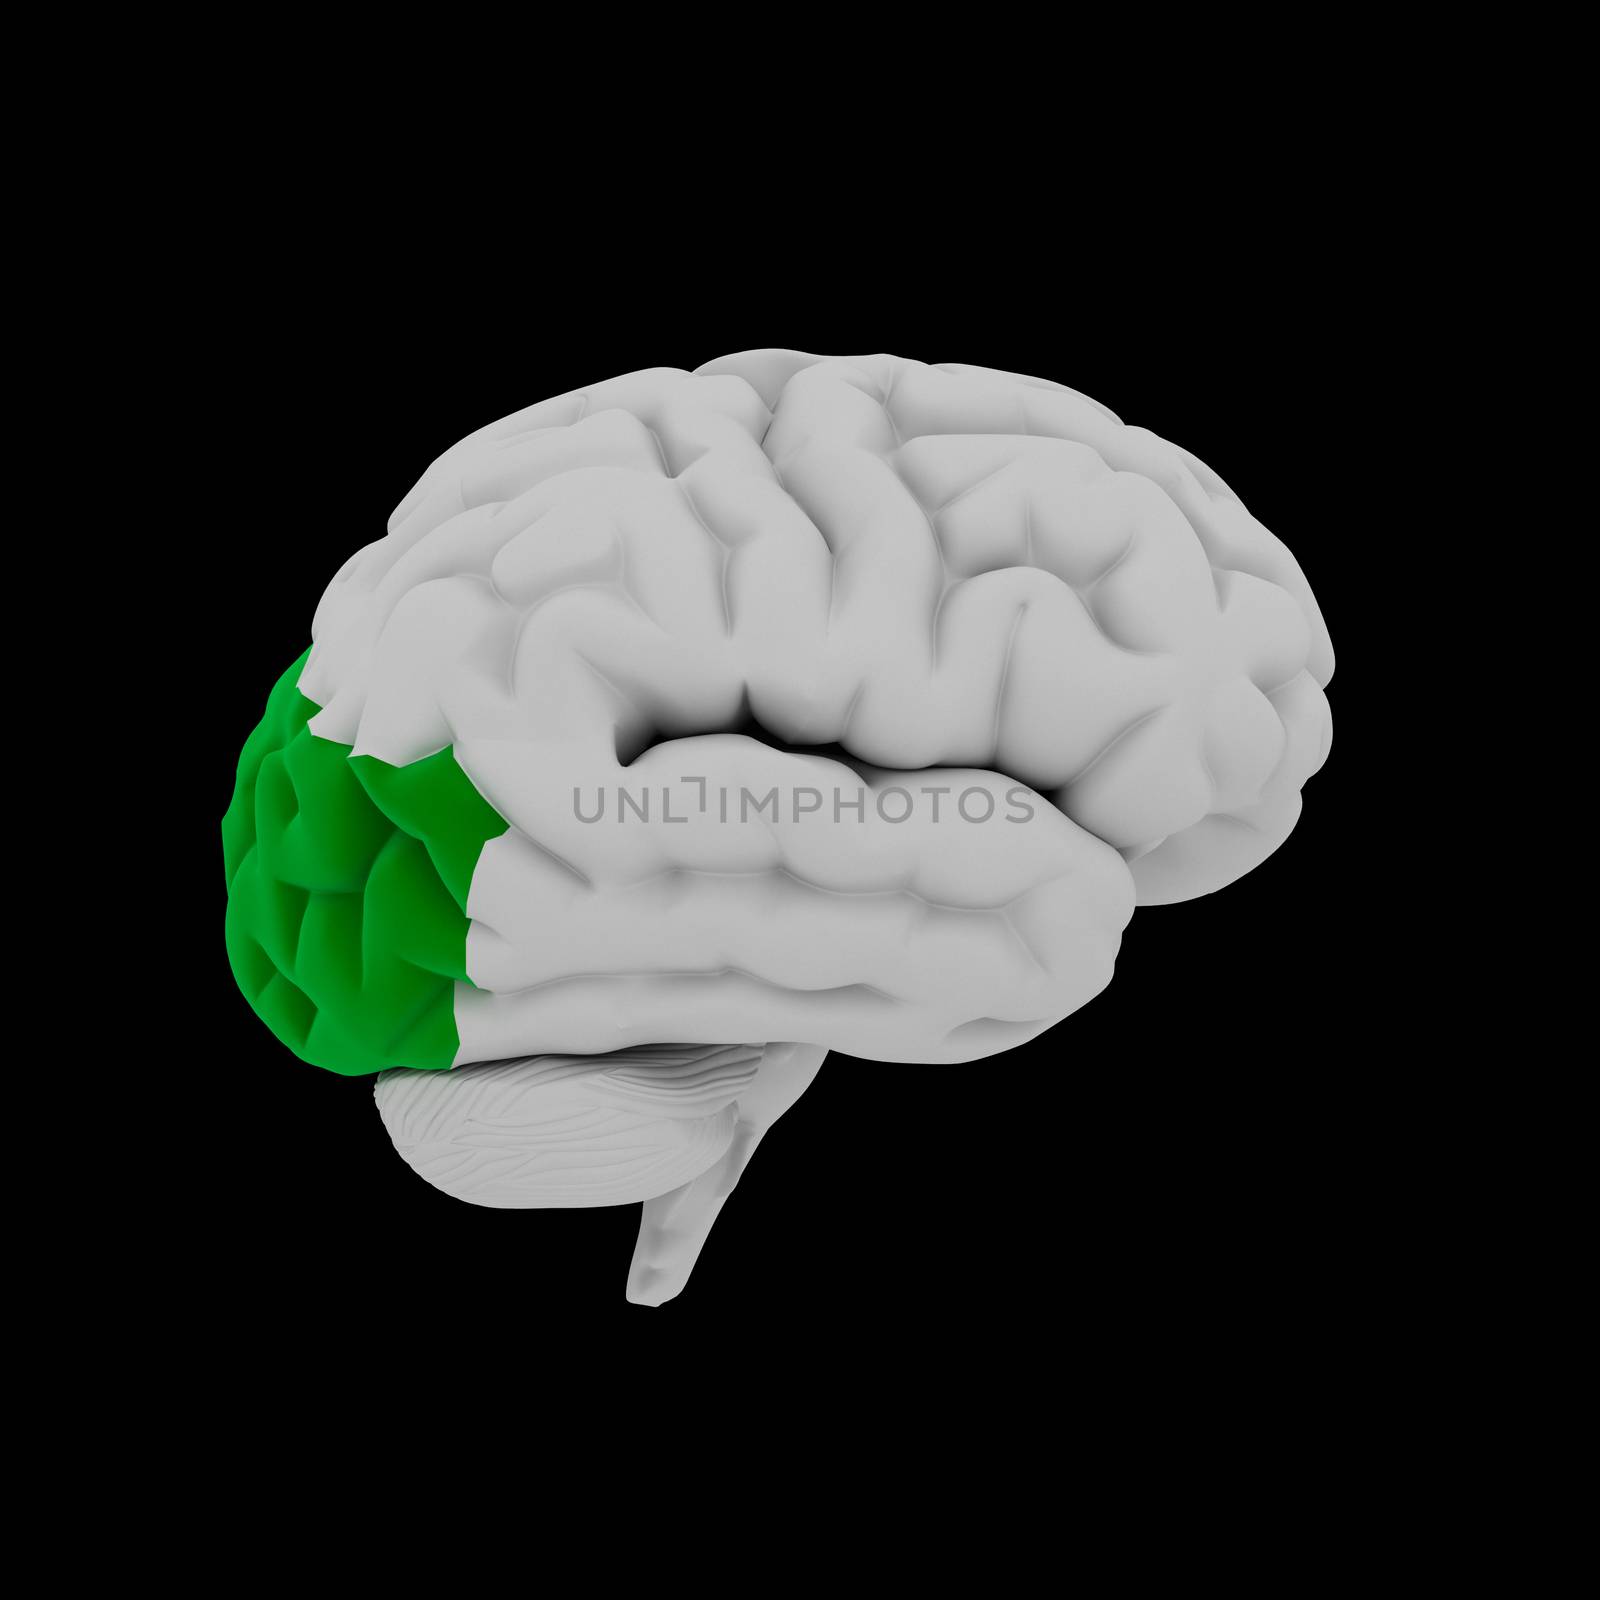 Occipital lobe by maya2008